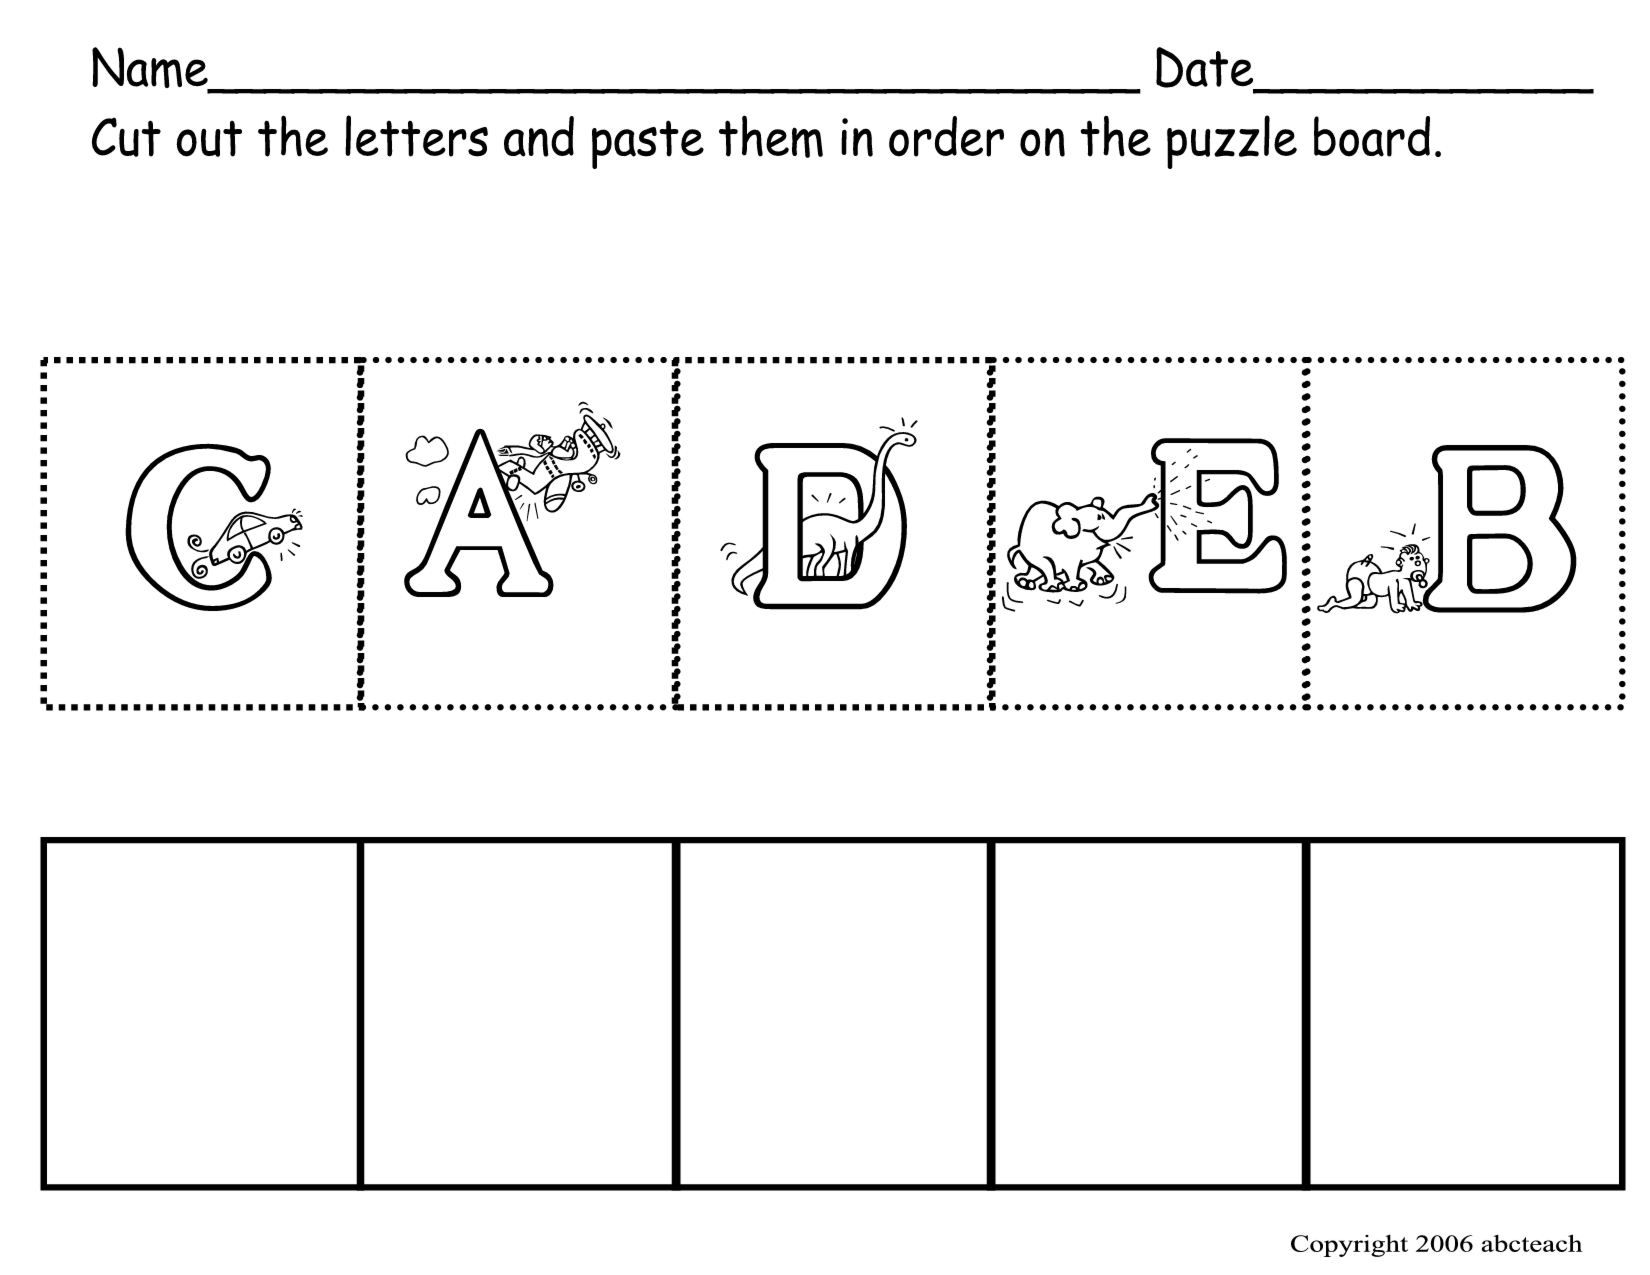 Alphabet Worksheets For Preschoolers | Abc Preschool in Letter A Worksheets For Kindergarten Pdf